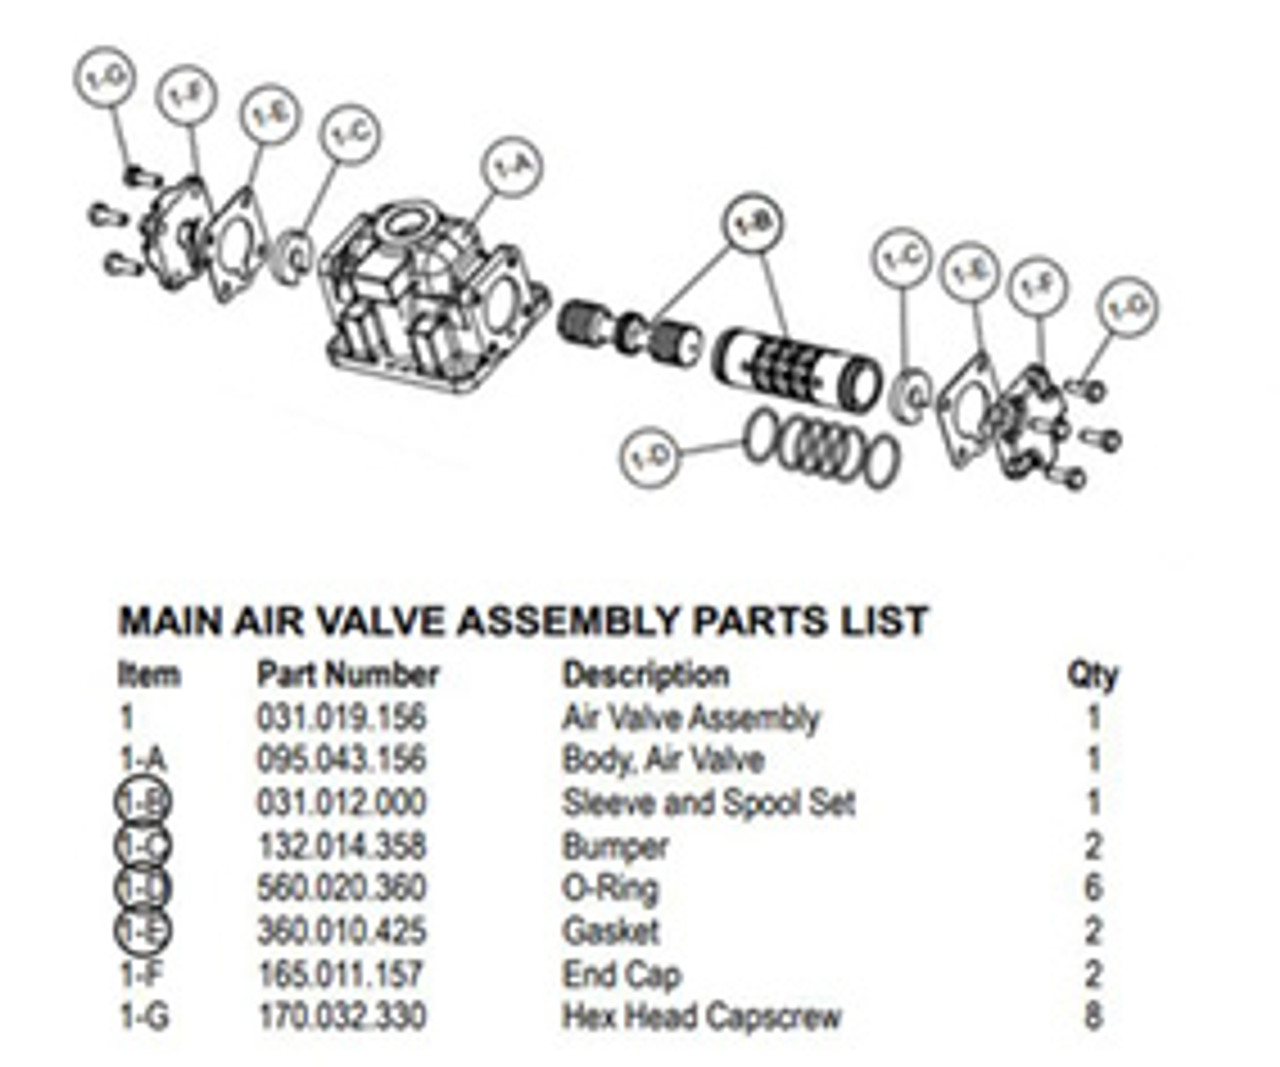 V031-019-156 Air Valve Assembly fits Sandpiper Pump, OEM P/N 031.019.156